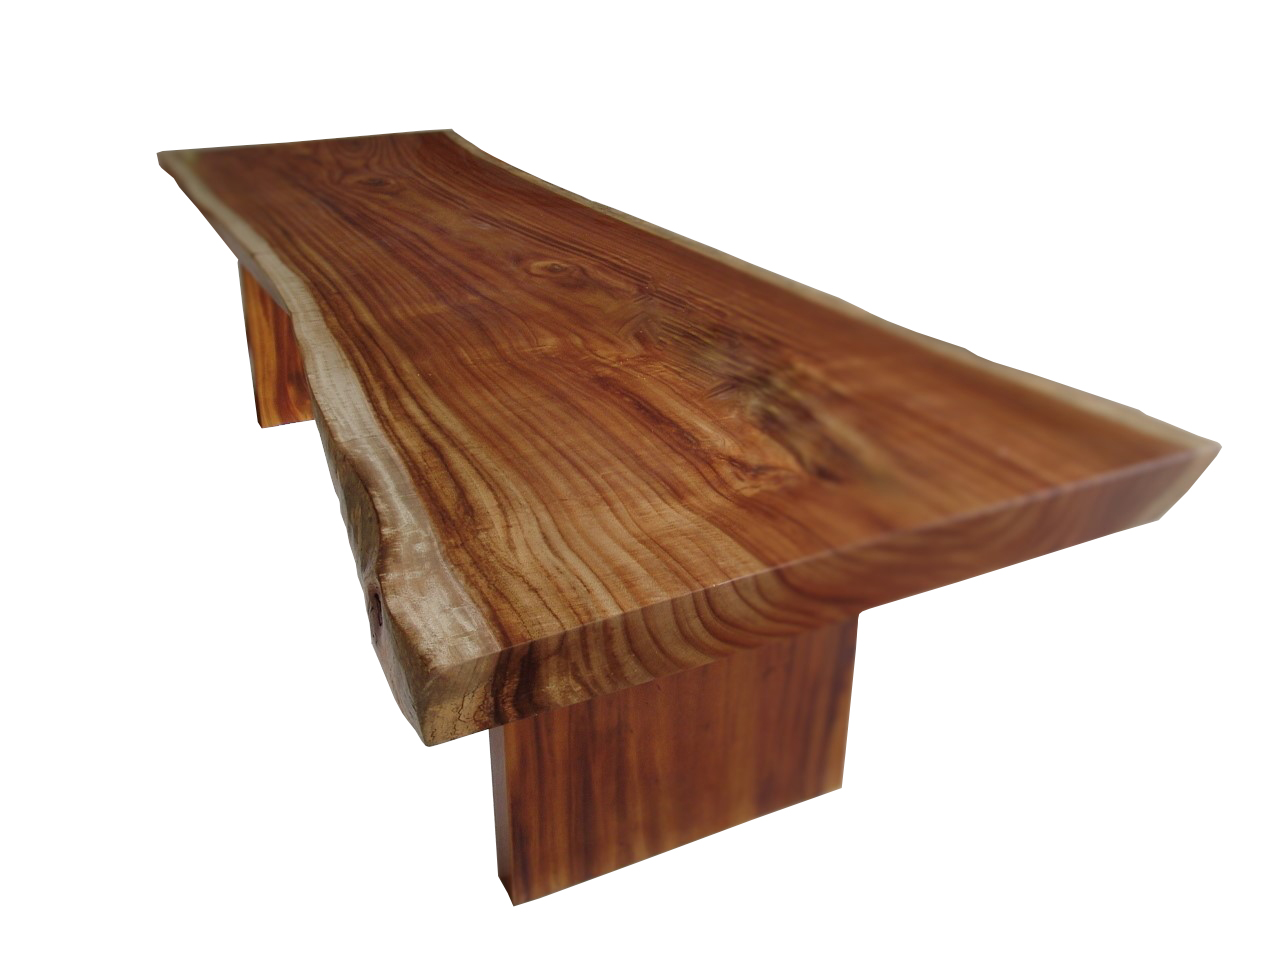 solid wood furniture monsoonwood™ table EJVAGIY